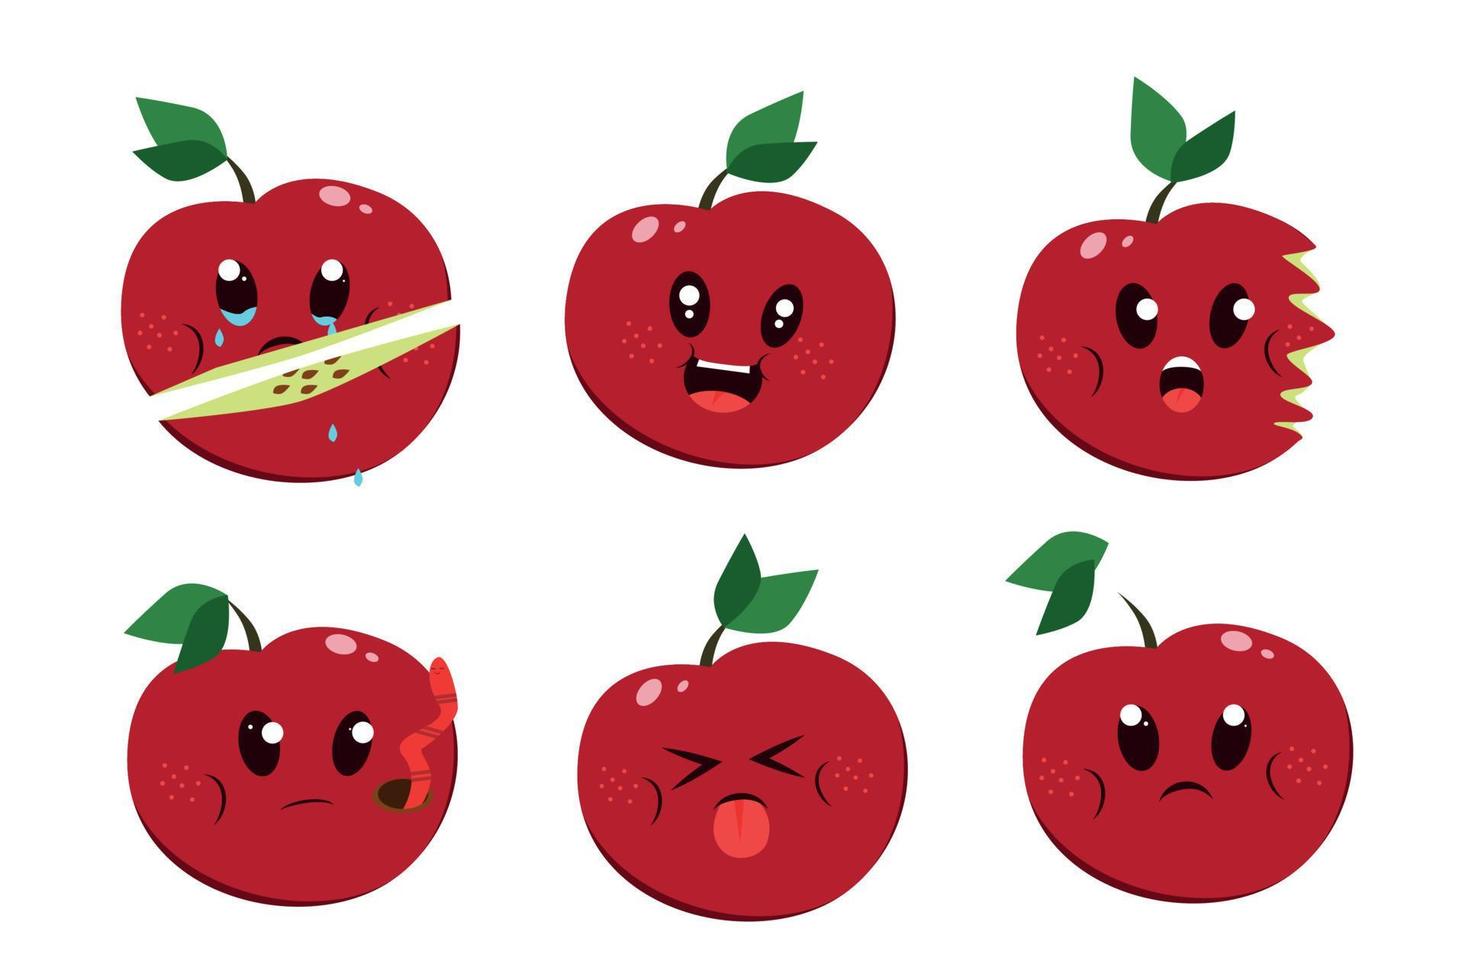 manzana roja con ojos kawaii manzana roja emoción diseño plano ilustración vectorial sobre un fondo blanco vector